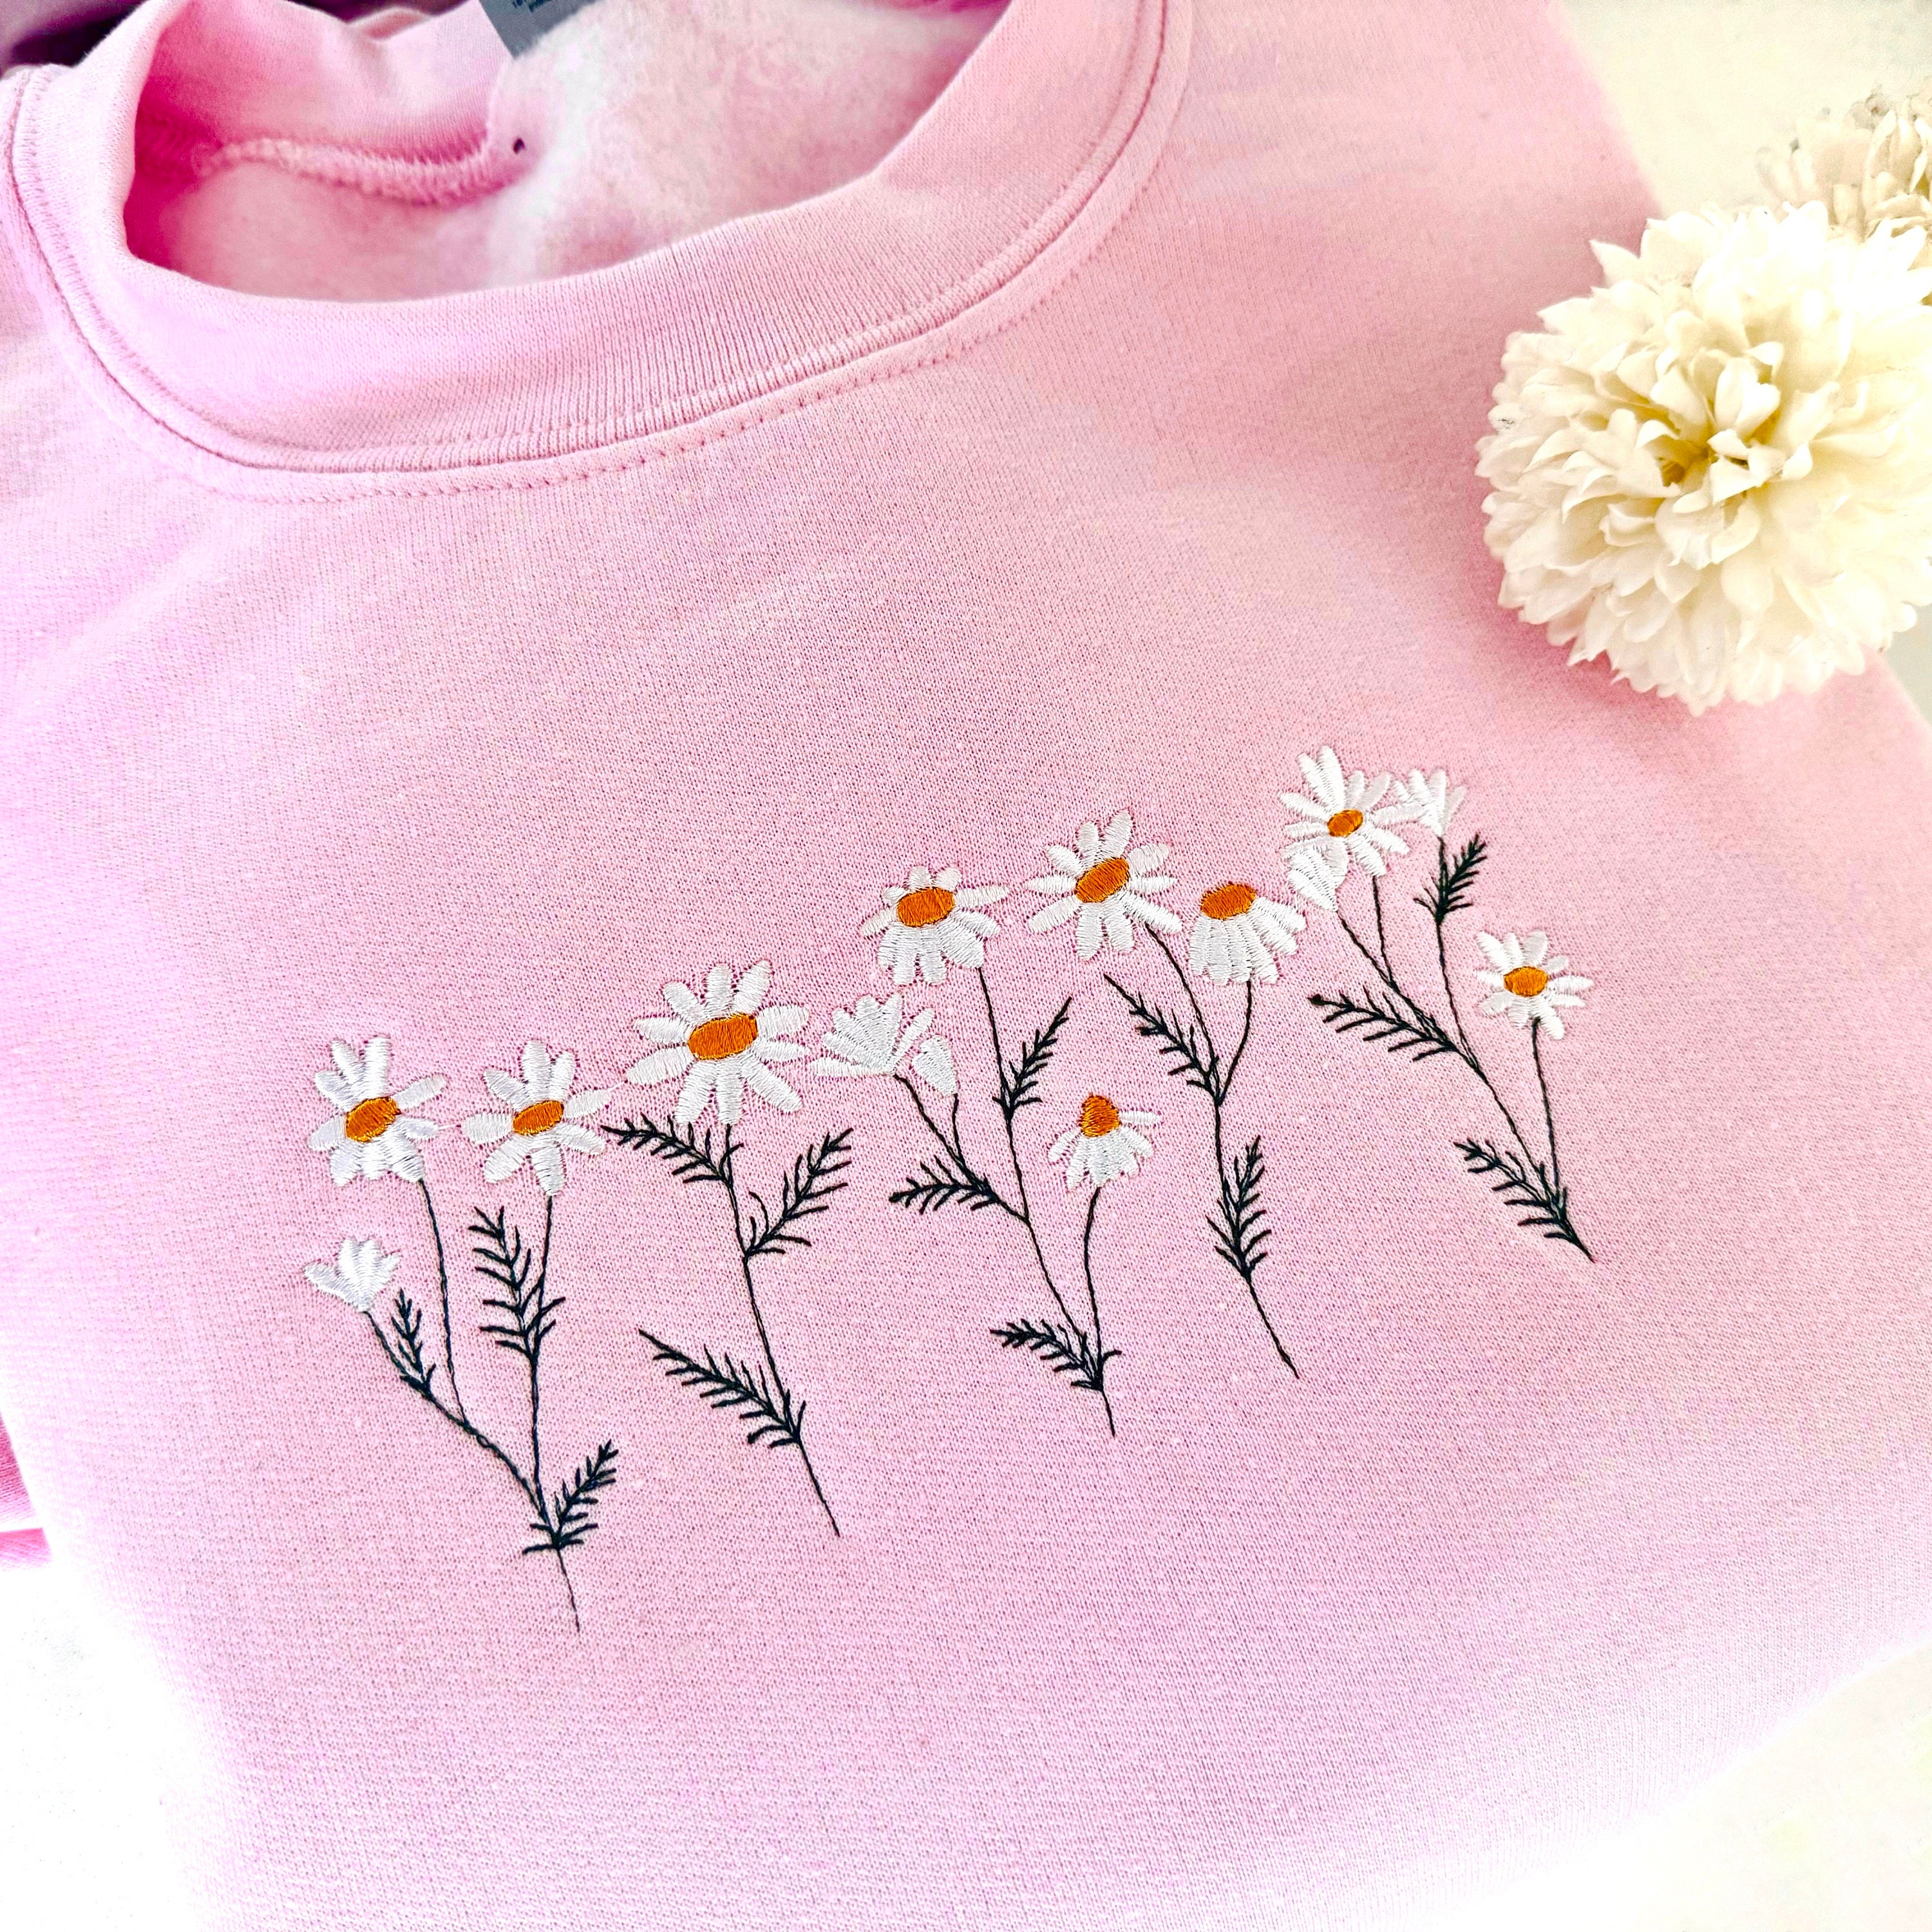 Discover Daisy Embroidered Sweatshirt, Flower Sweatshirt